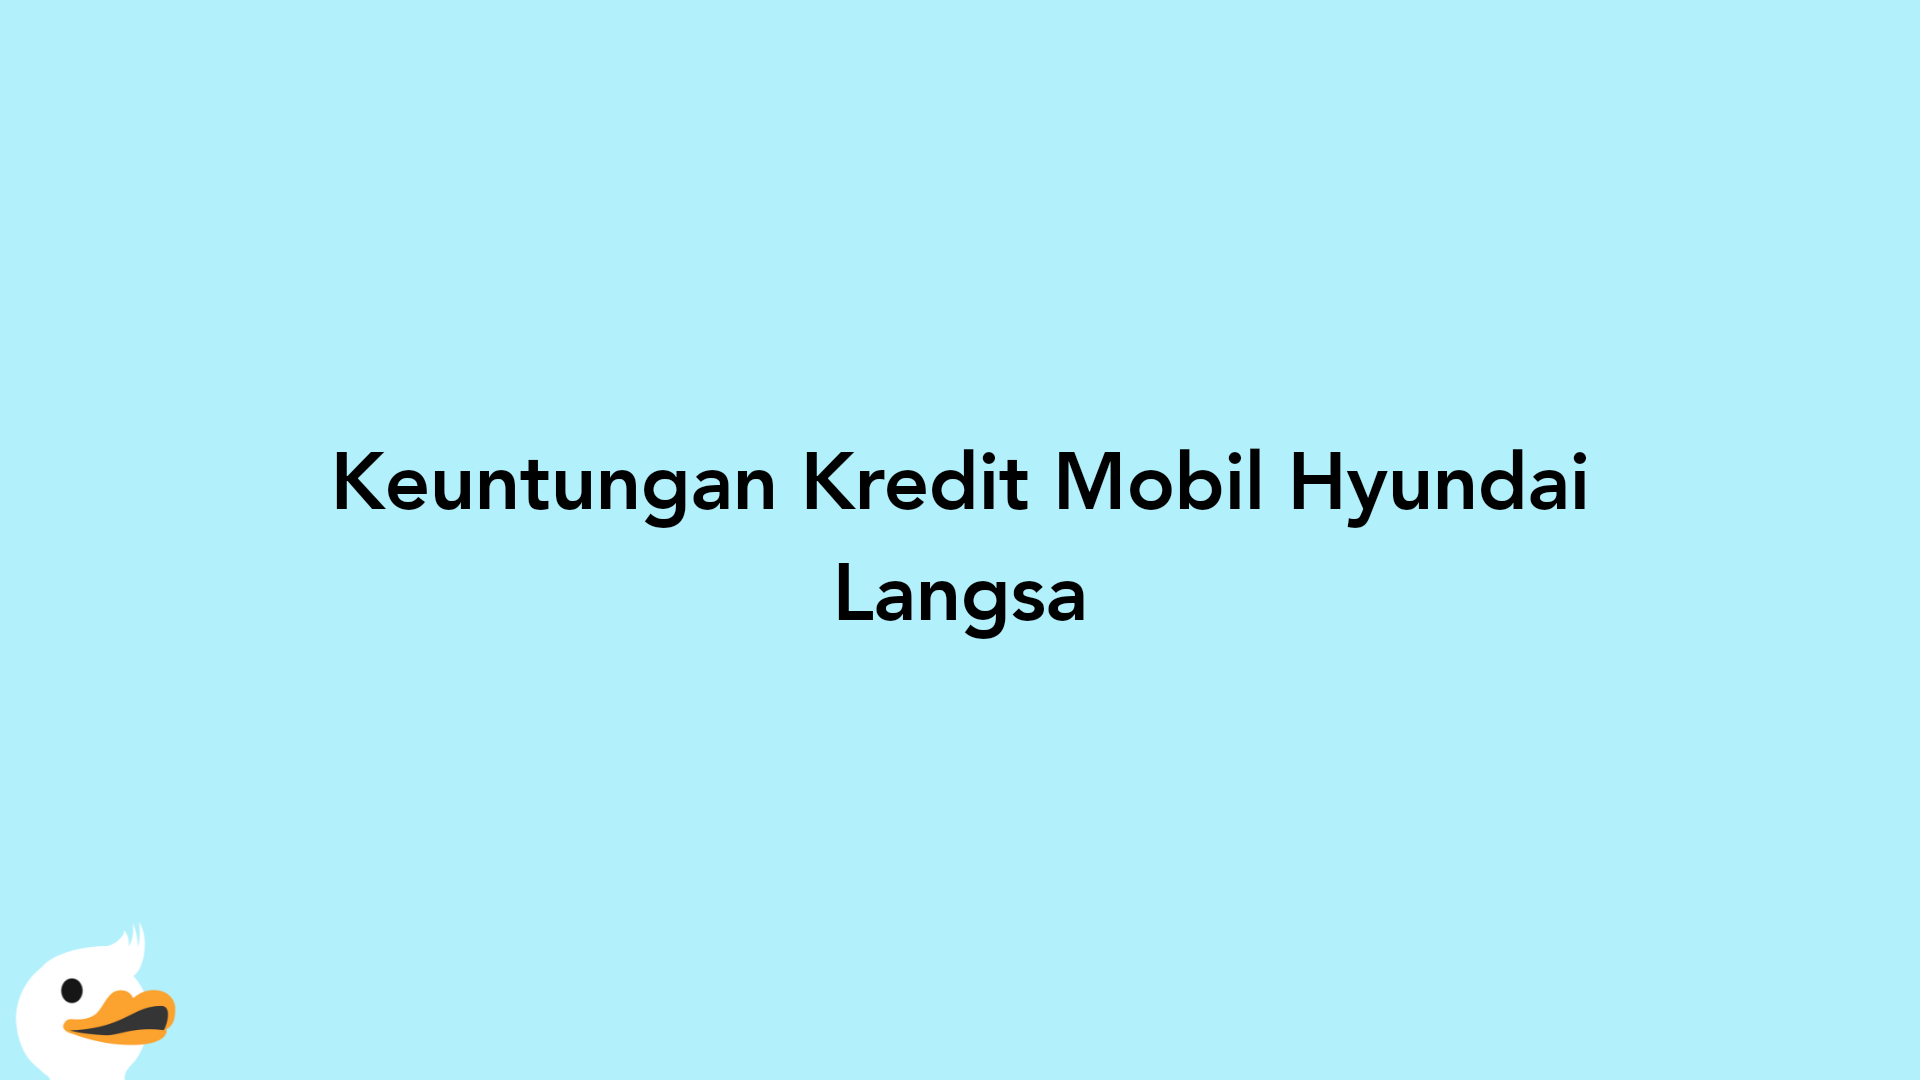 Keuntungan Kredit Mobil Hyundai Langsa